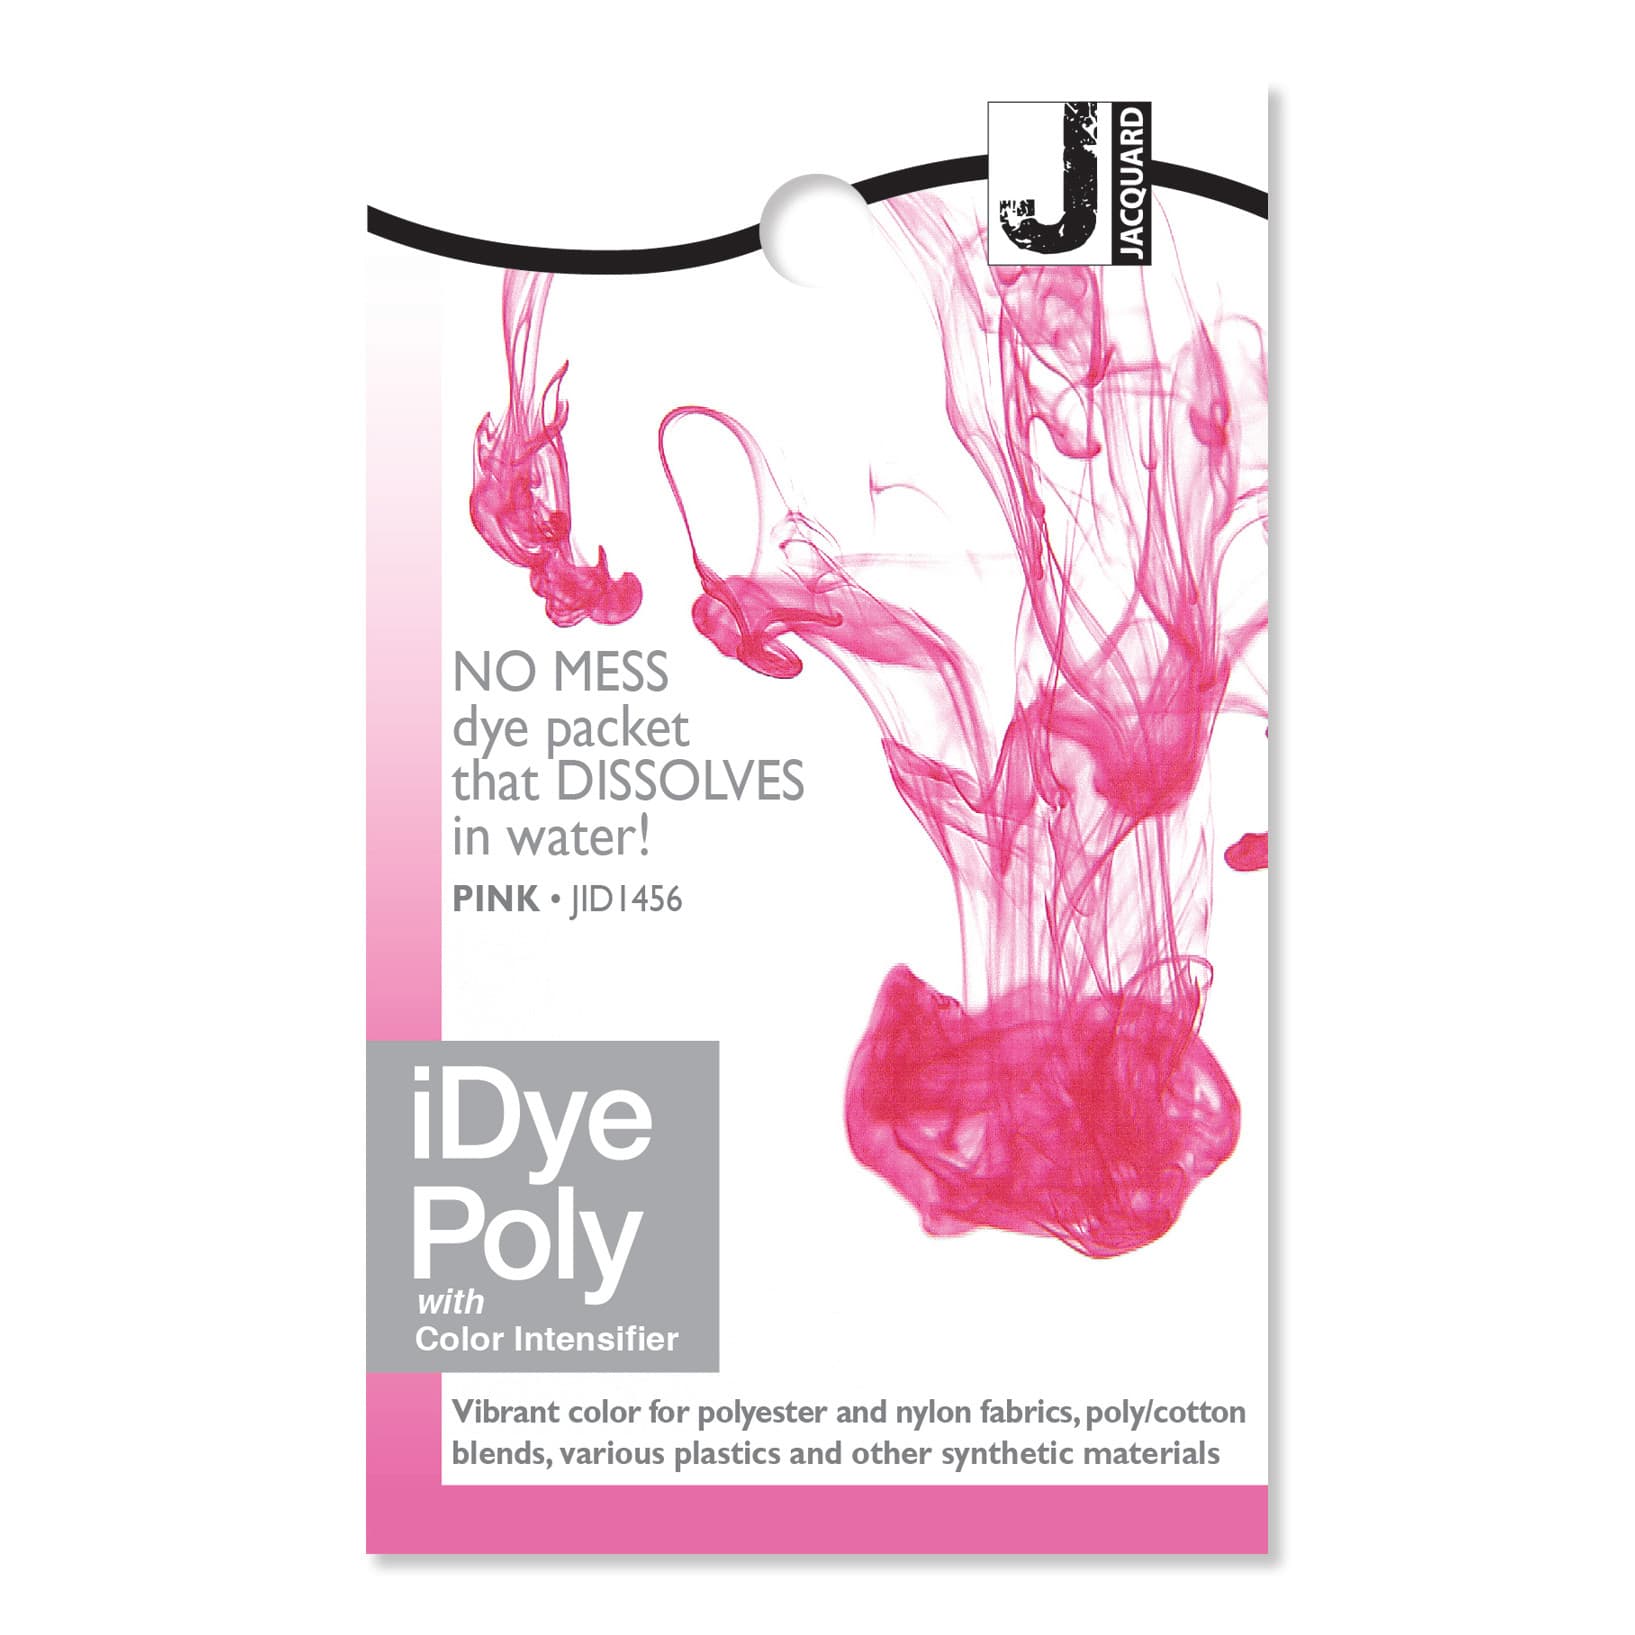 Jacquard - iDye Fabric Dye - 100% Natural Fabric iDye - True Red - Sam Flax  Atlanta